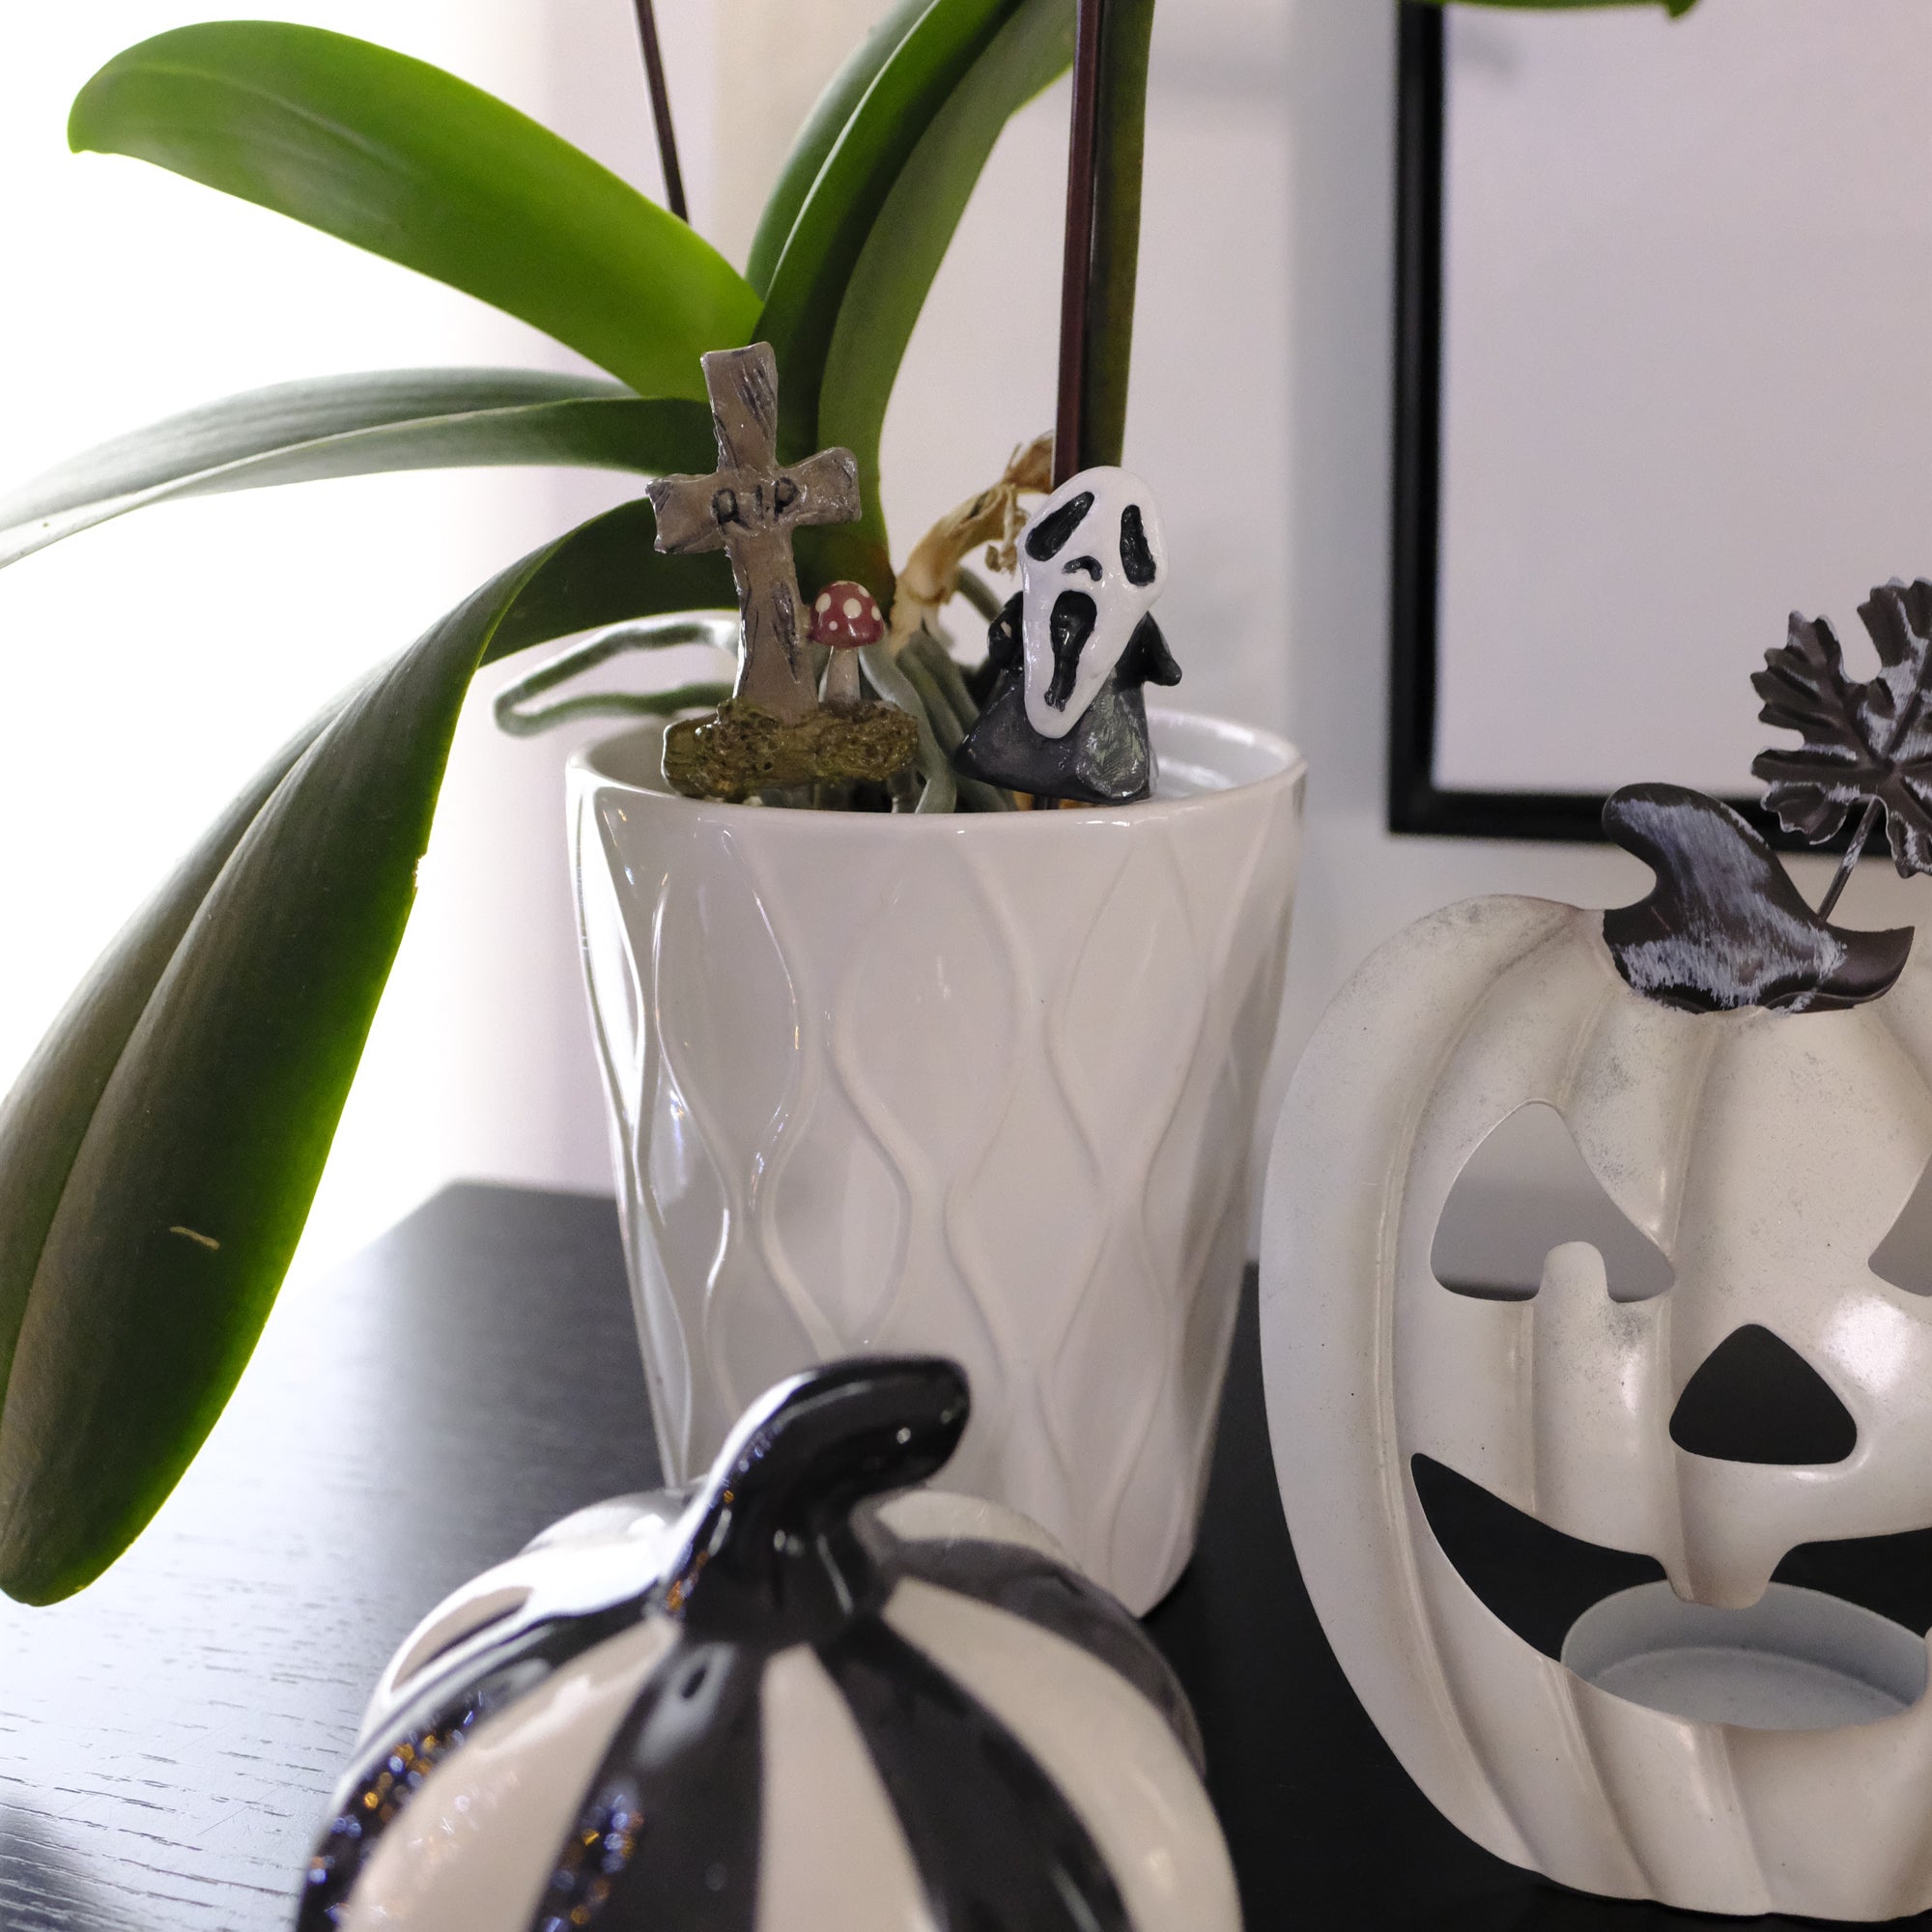 Hailey's Magical Mushroom Creations: A Spooky Surprise for Halloween